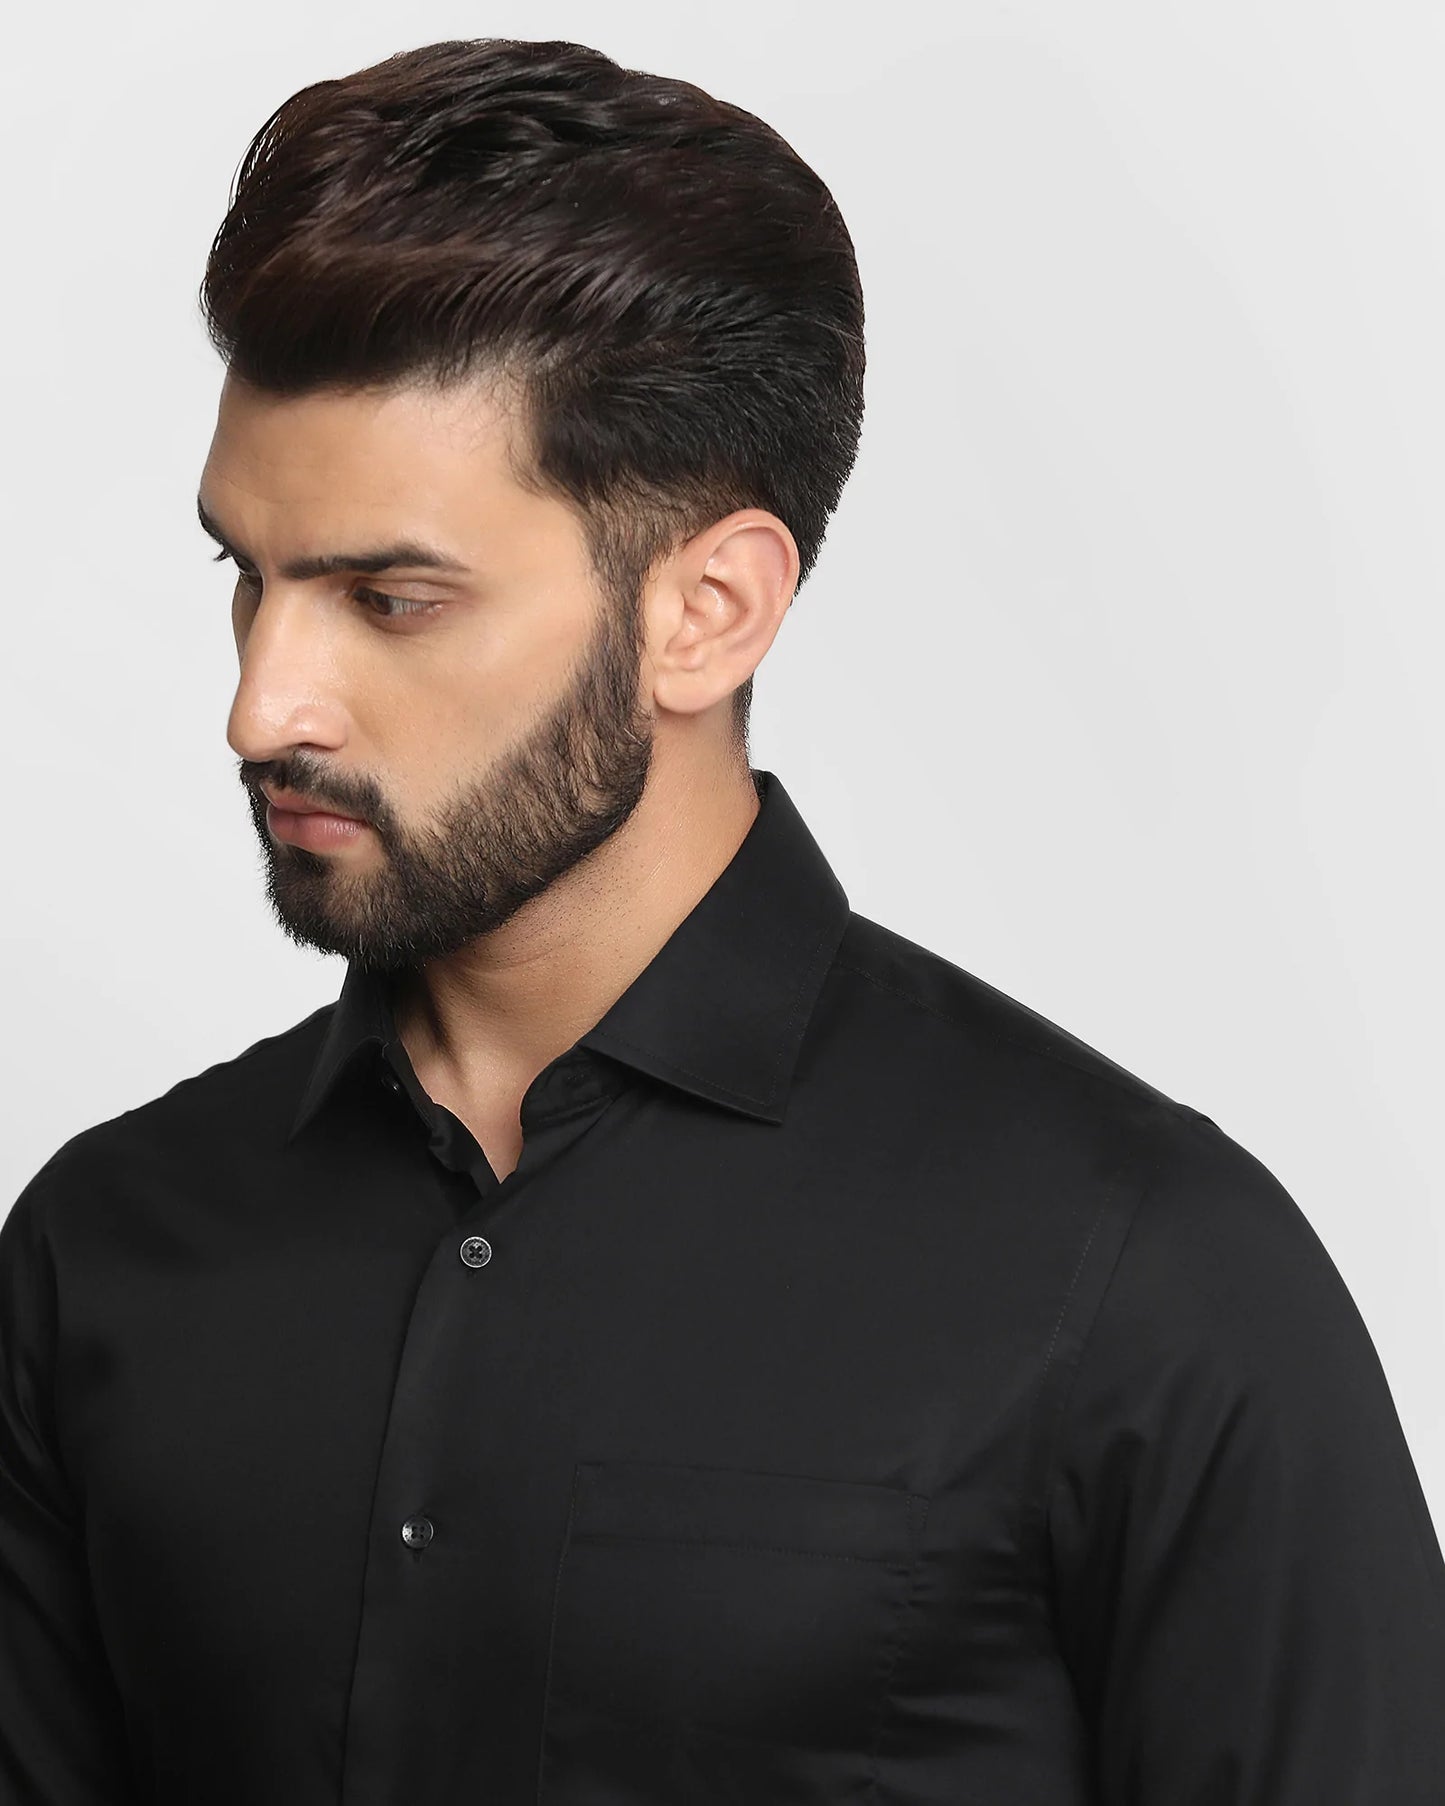 Solid formal shirt in black